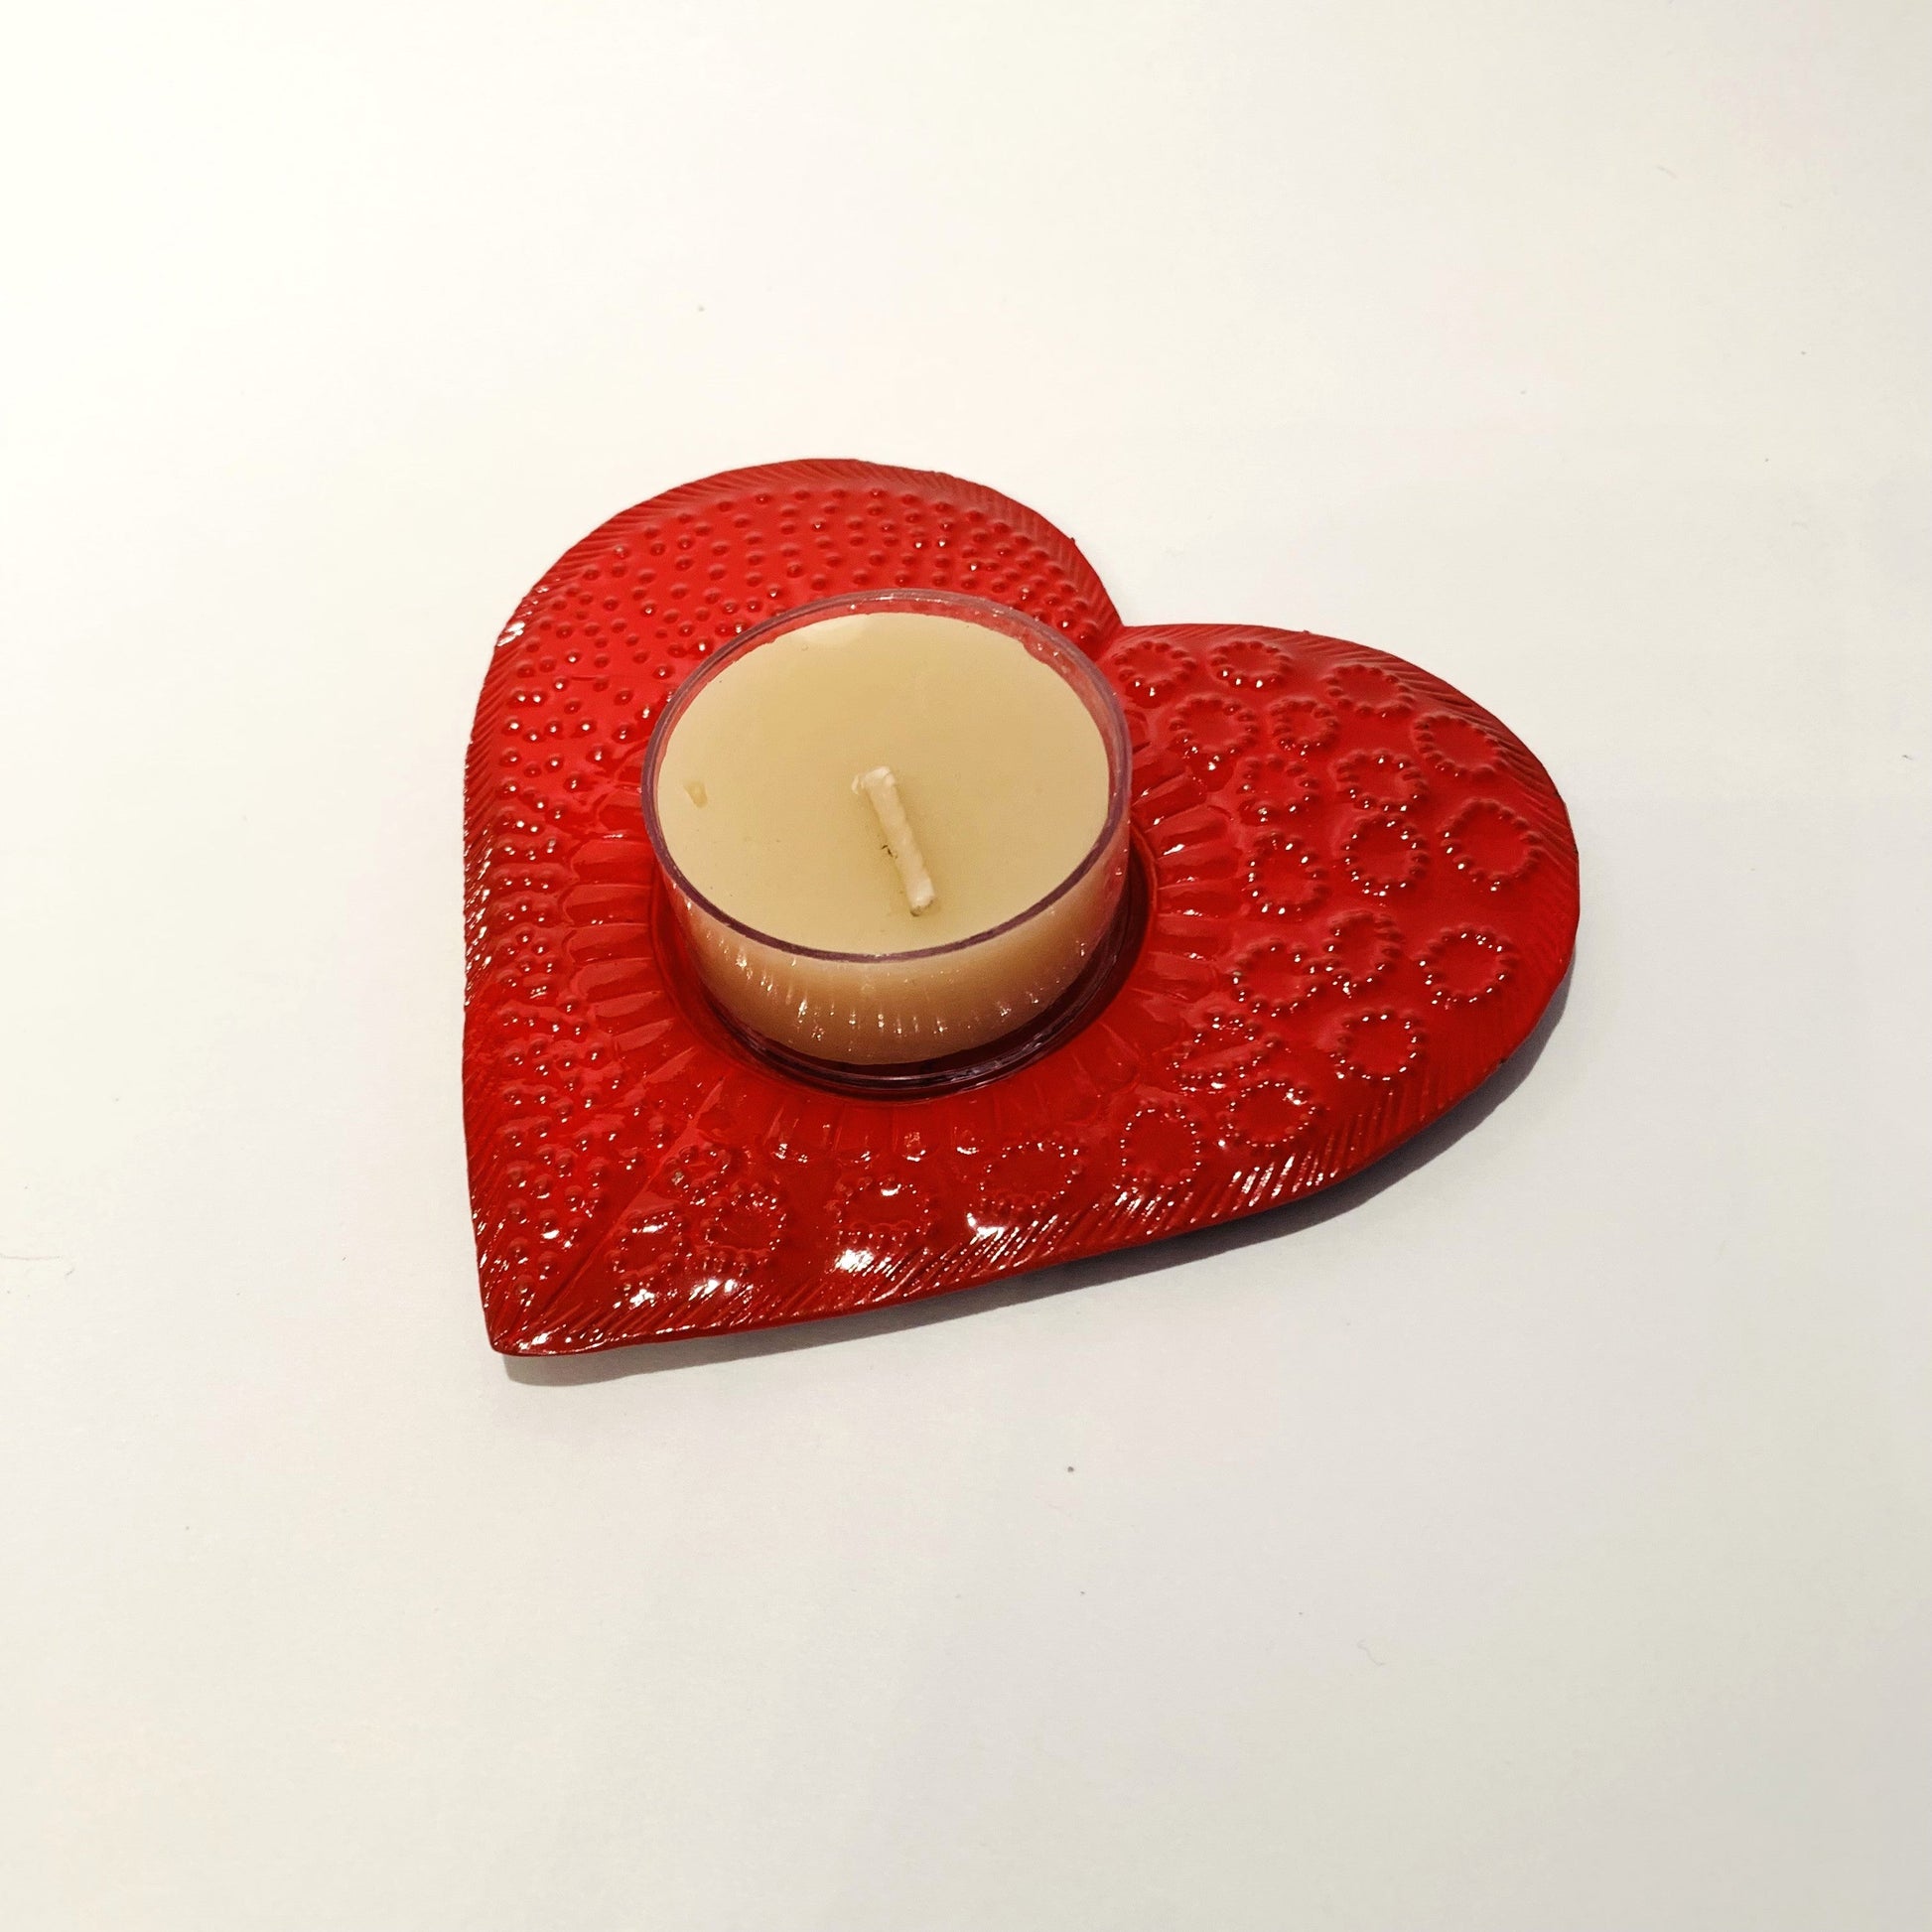 Metal Tealight Plate - Red Heart